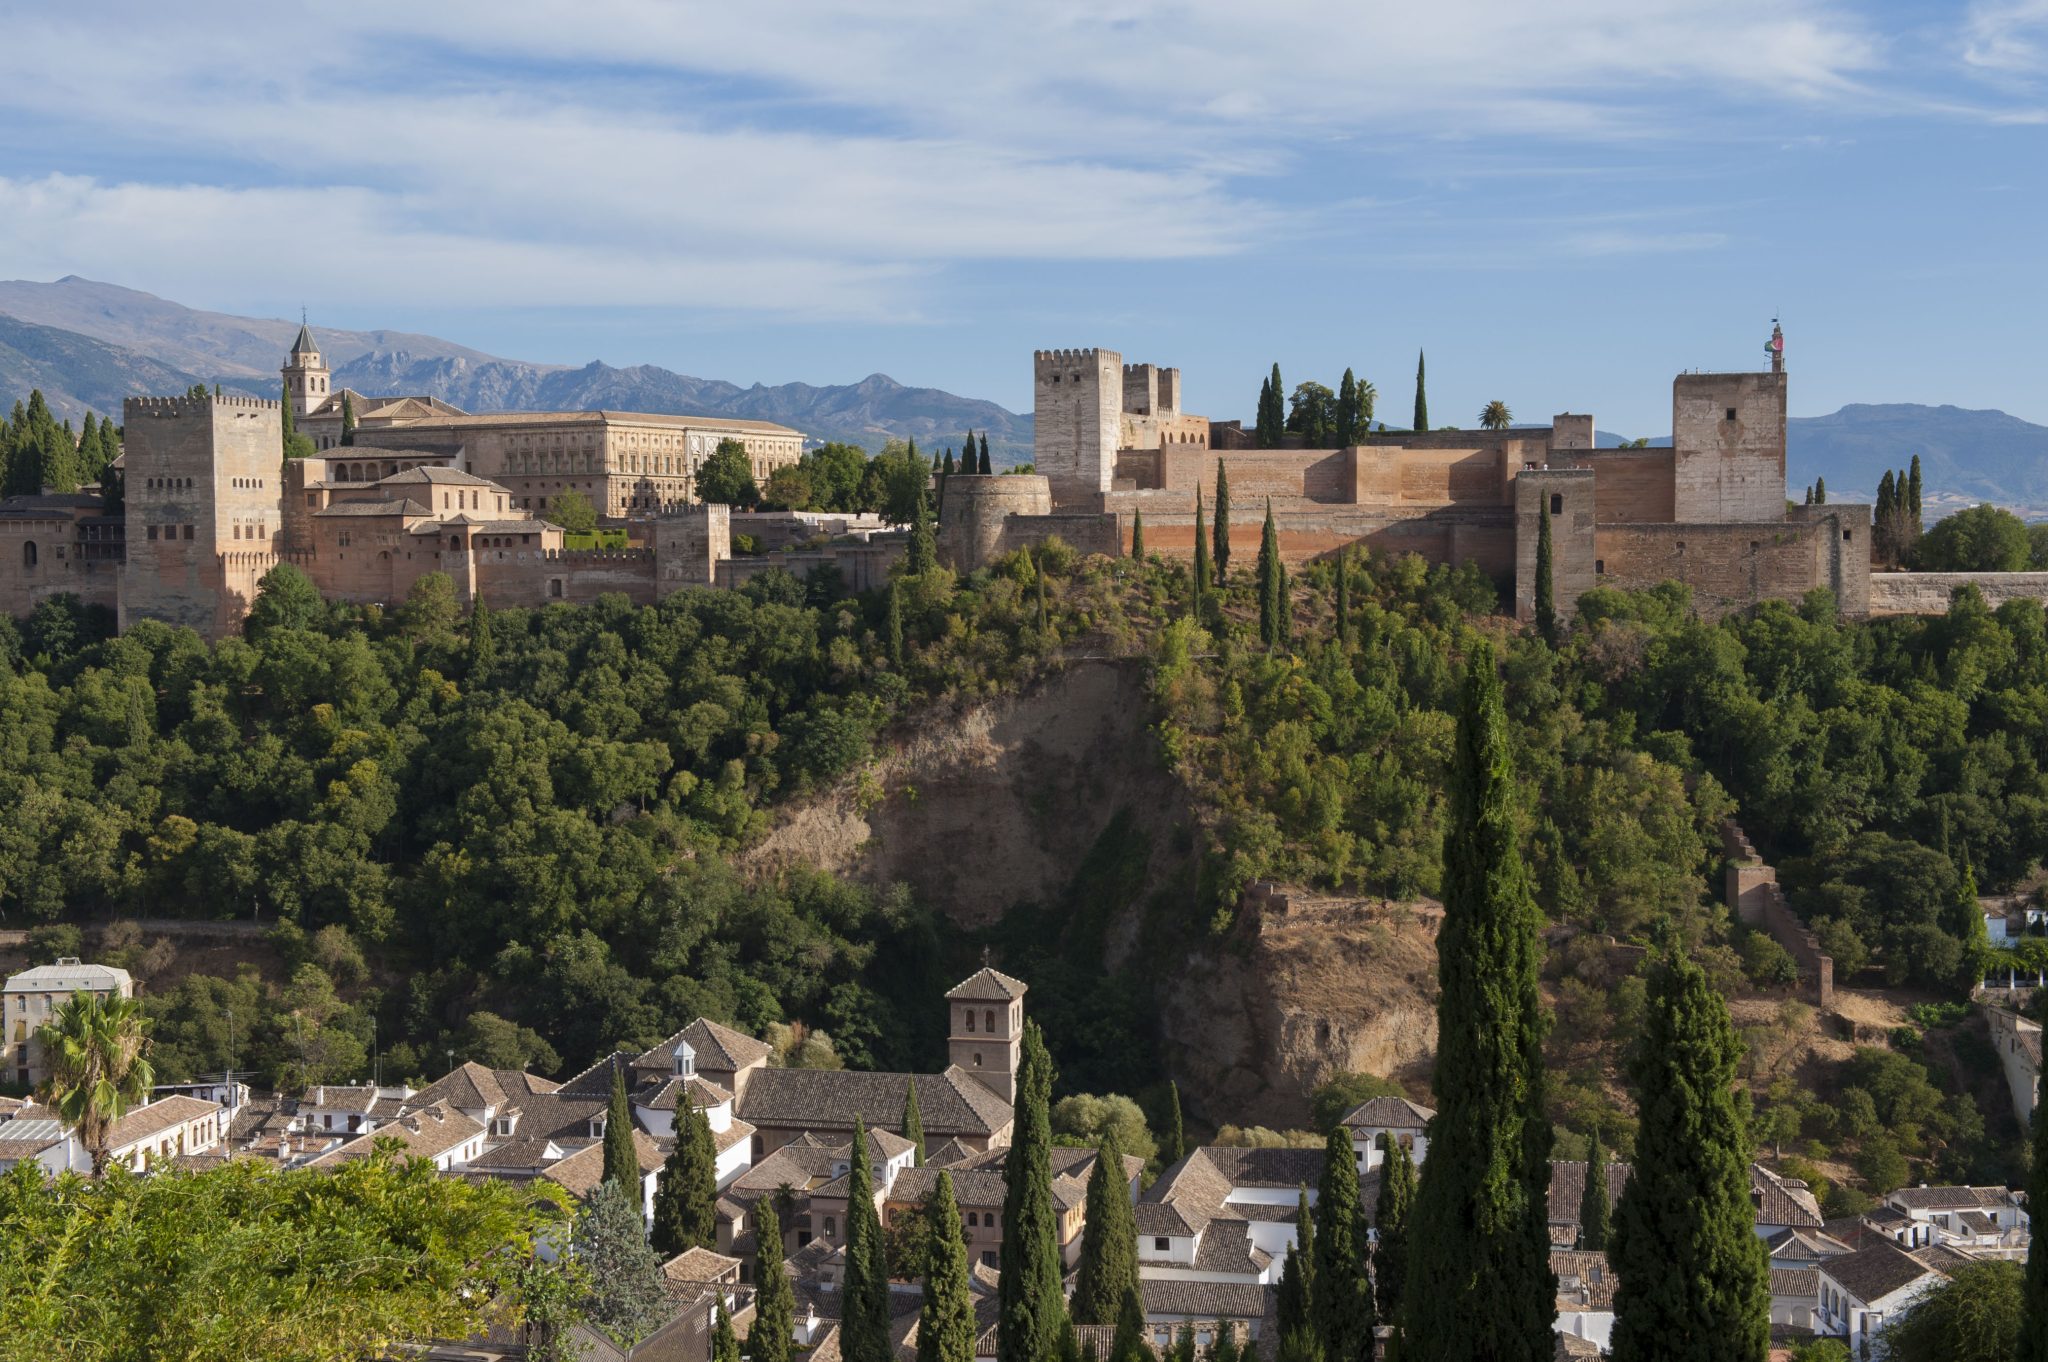 Mirador de San Nicolás. Viewpoint in Granada, Spain, of the Alhambra, the Generalife, and Sierra Nevada behind – WorldPhotographyDay22